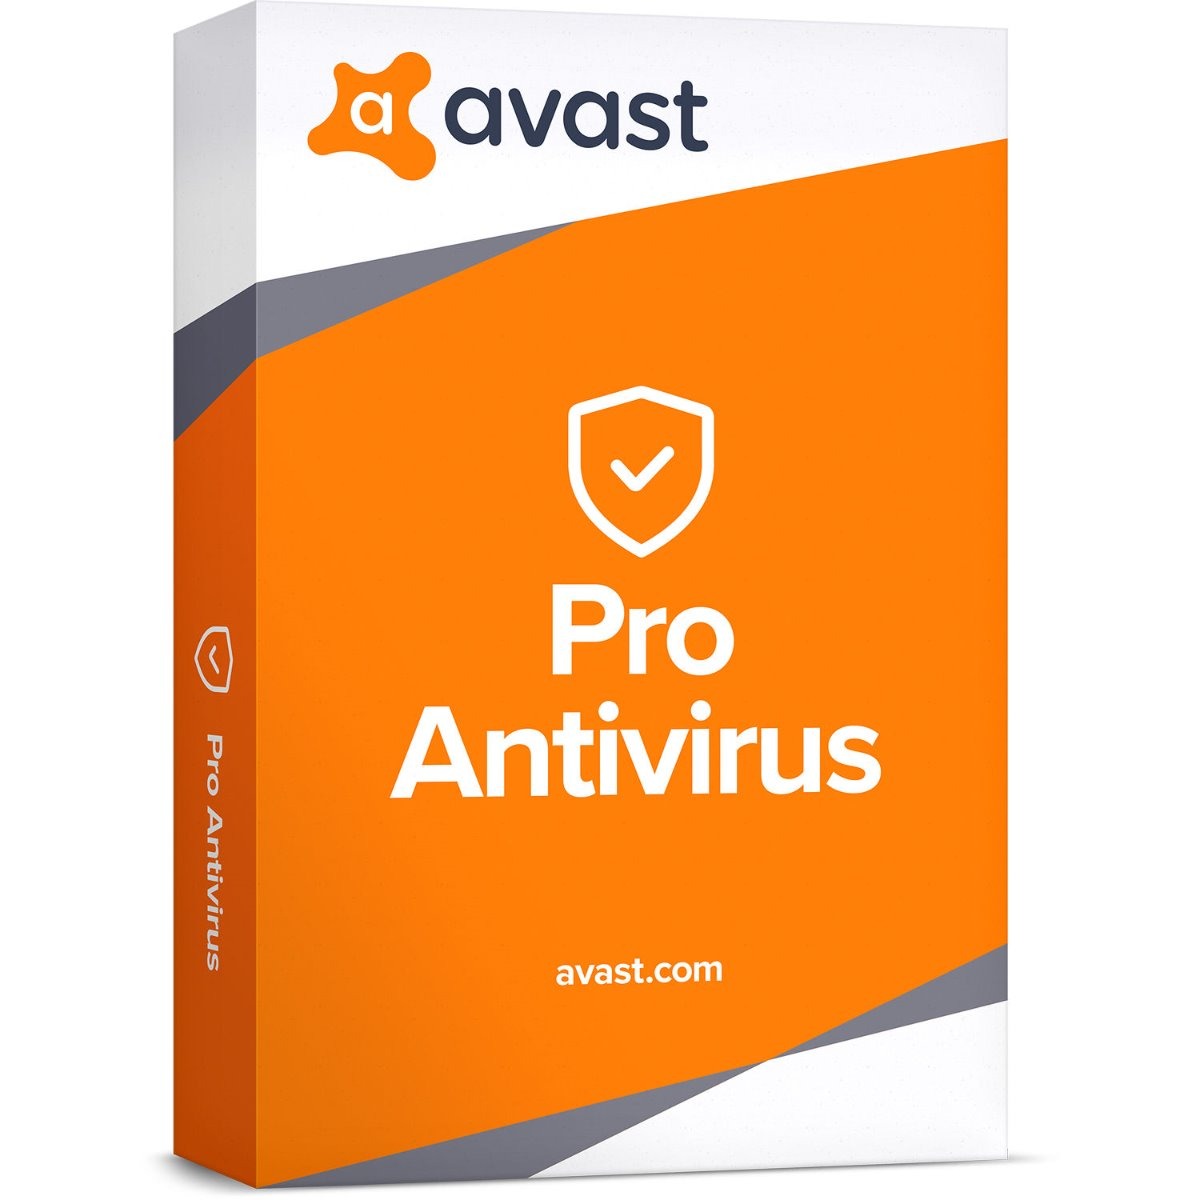 Avast Pro Antivirus 2019 License File Free Download Full Version